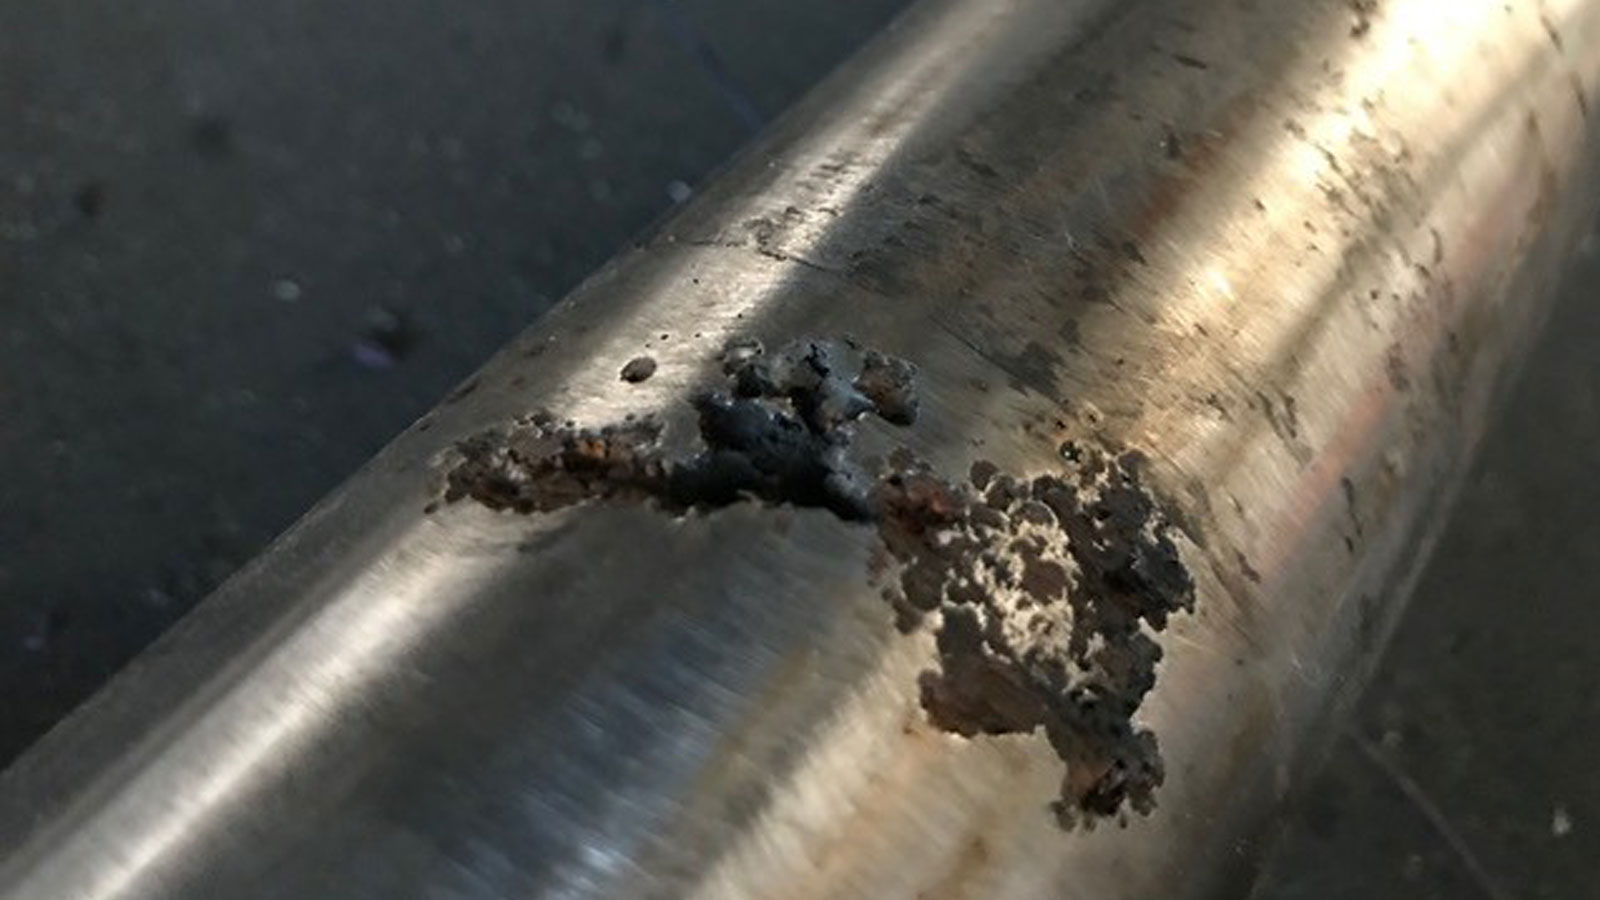 Atrolytic corrosion is seen on a stern shaft